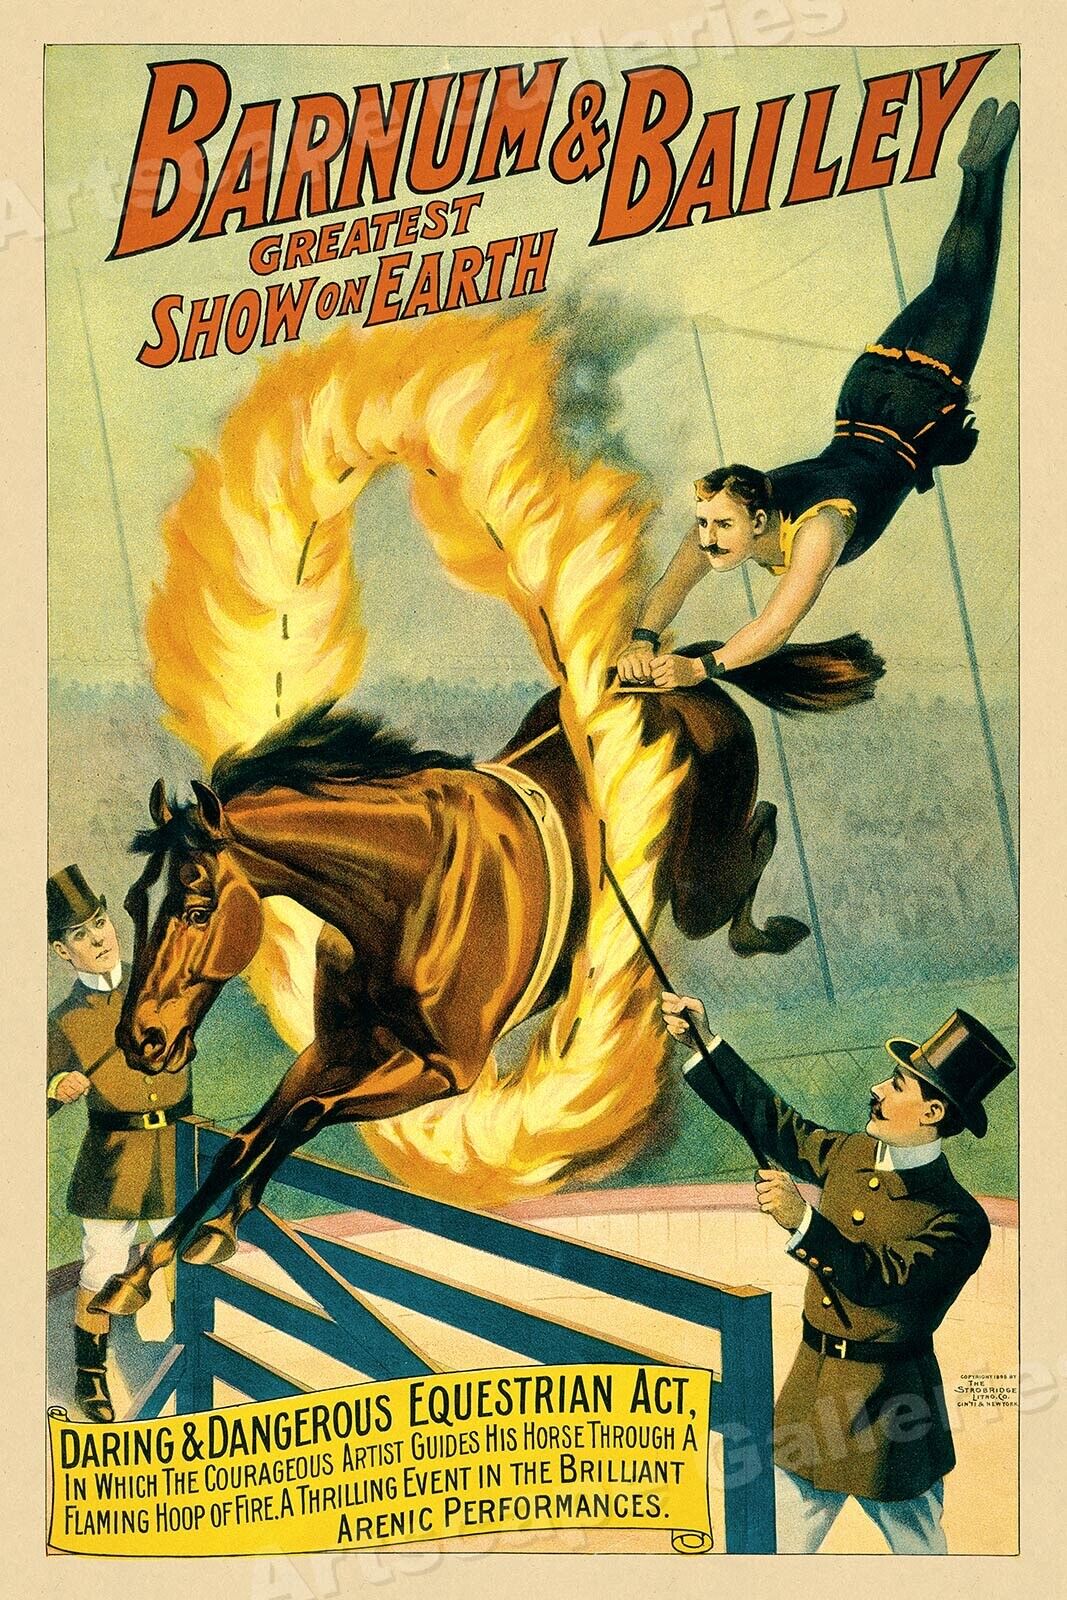 Barnum & Bailey Daring Dangerous Equestrian Act 1890s Circus Poster - 24x36